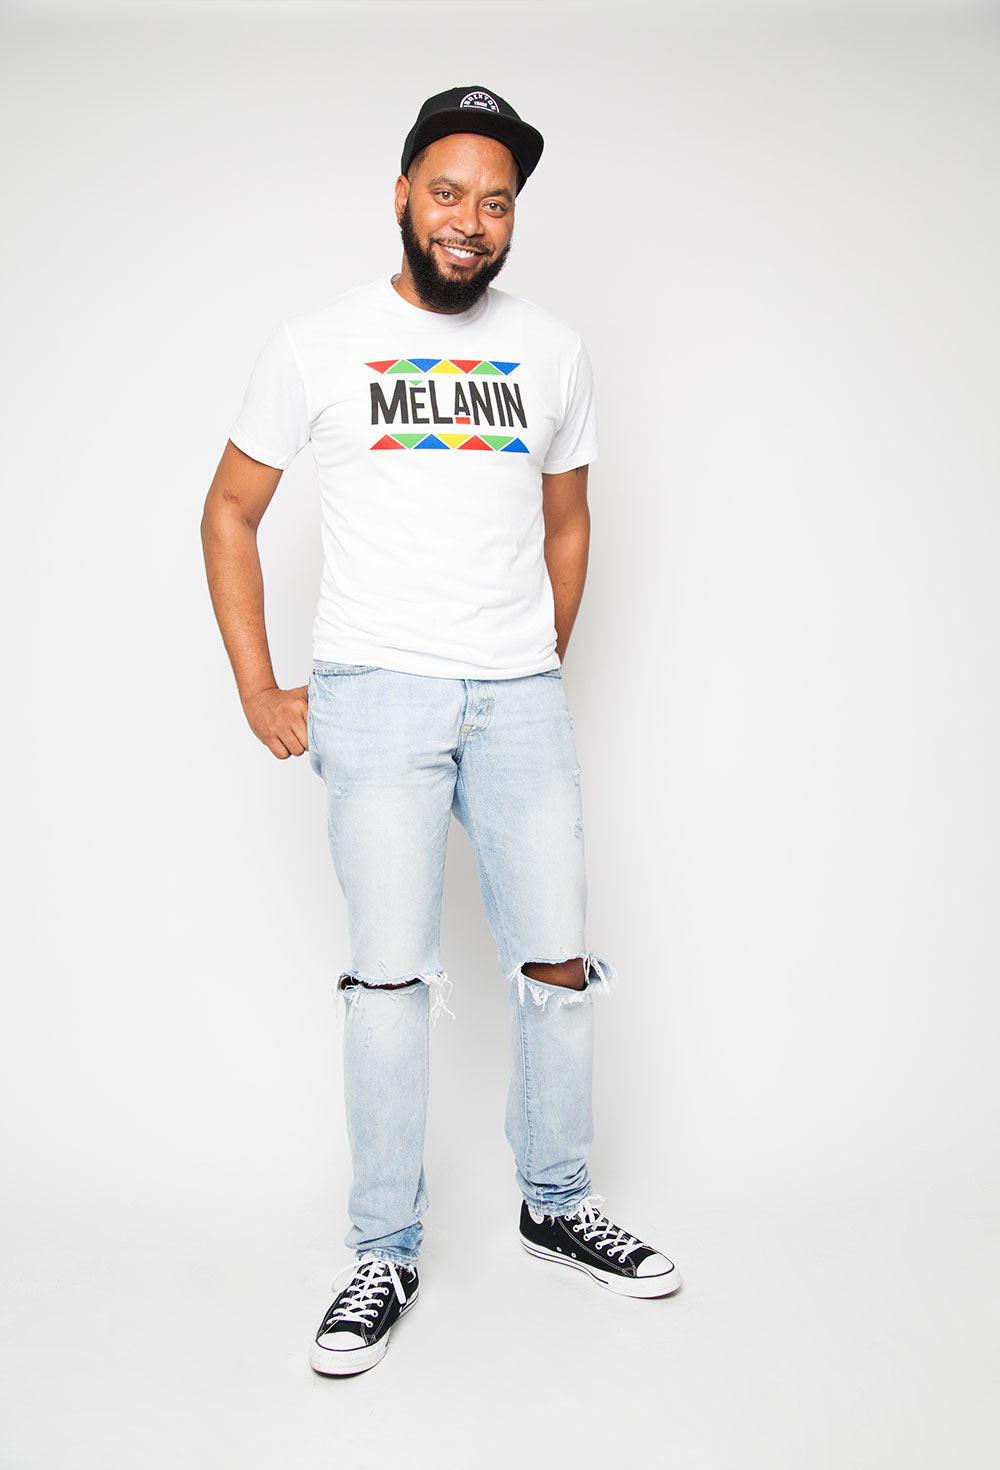 Melanin Shirt in White - Trunk Series